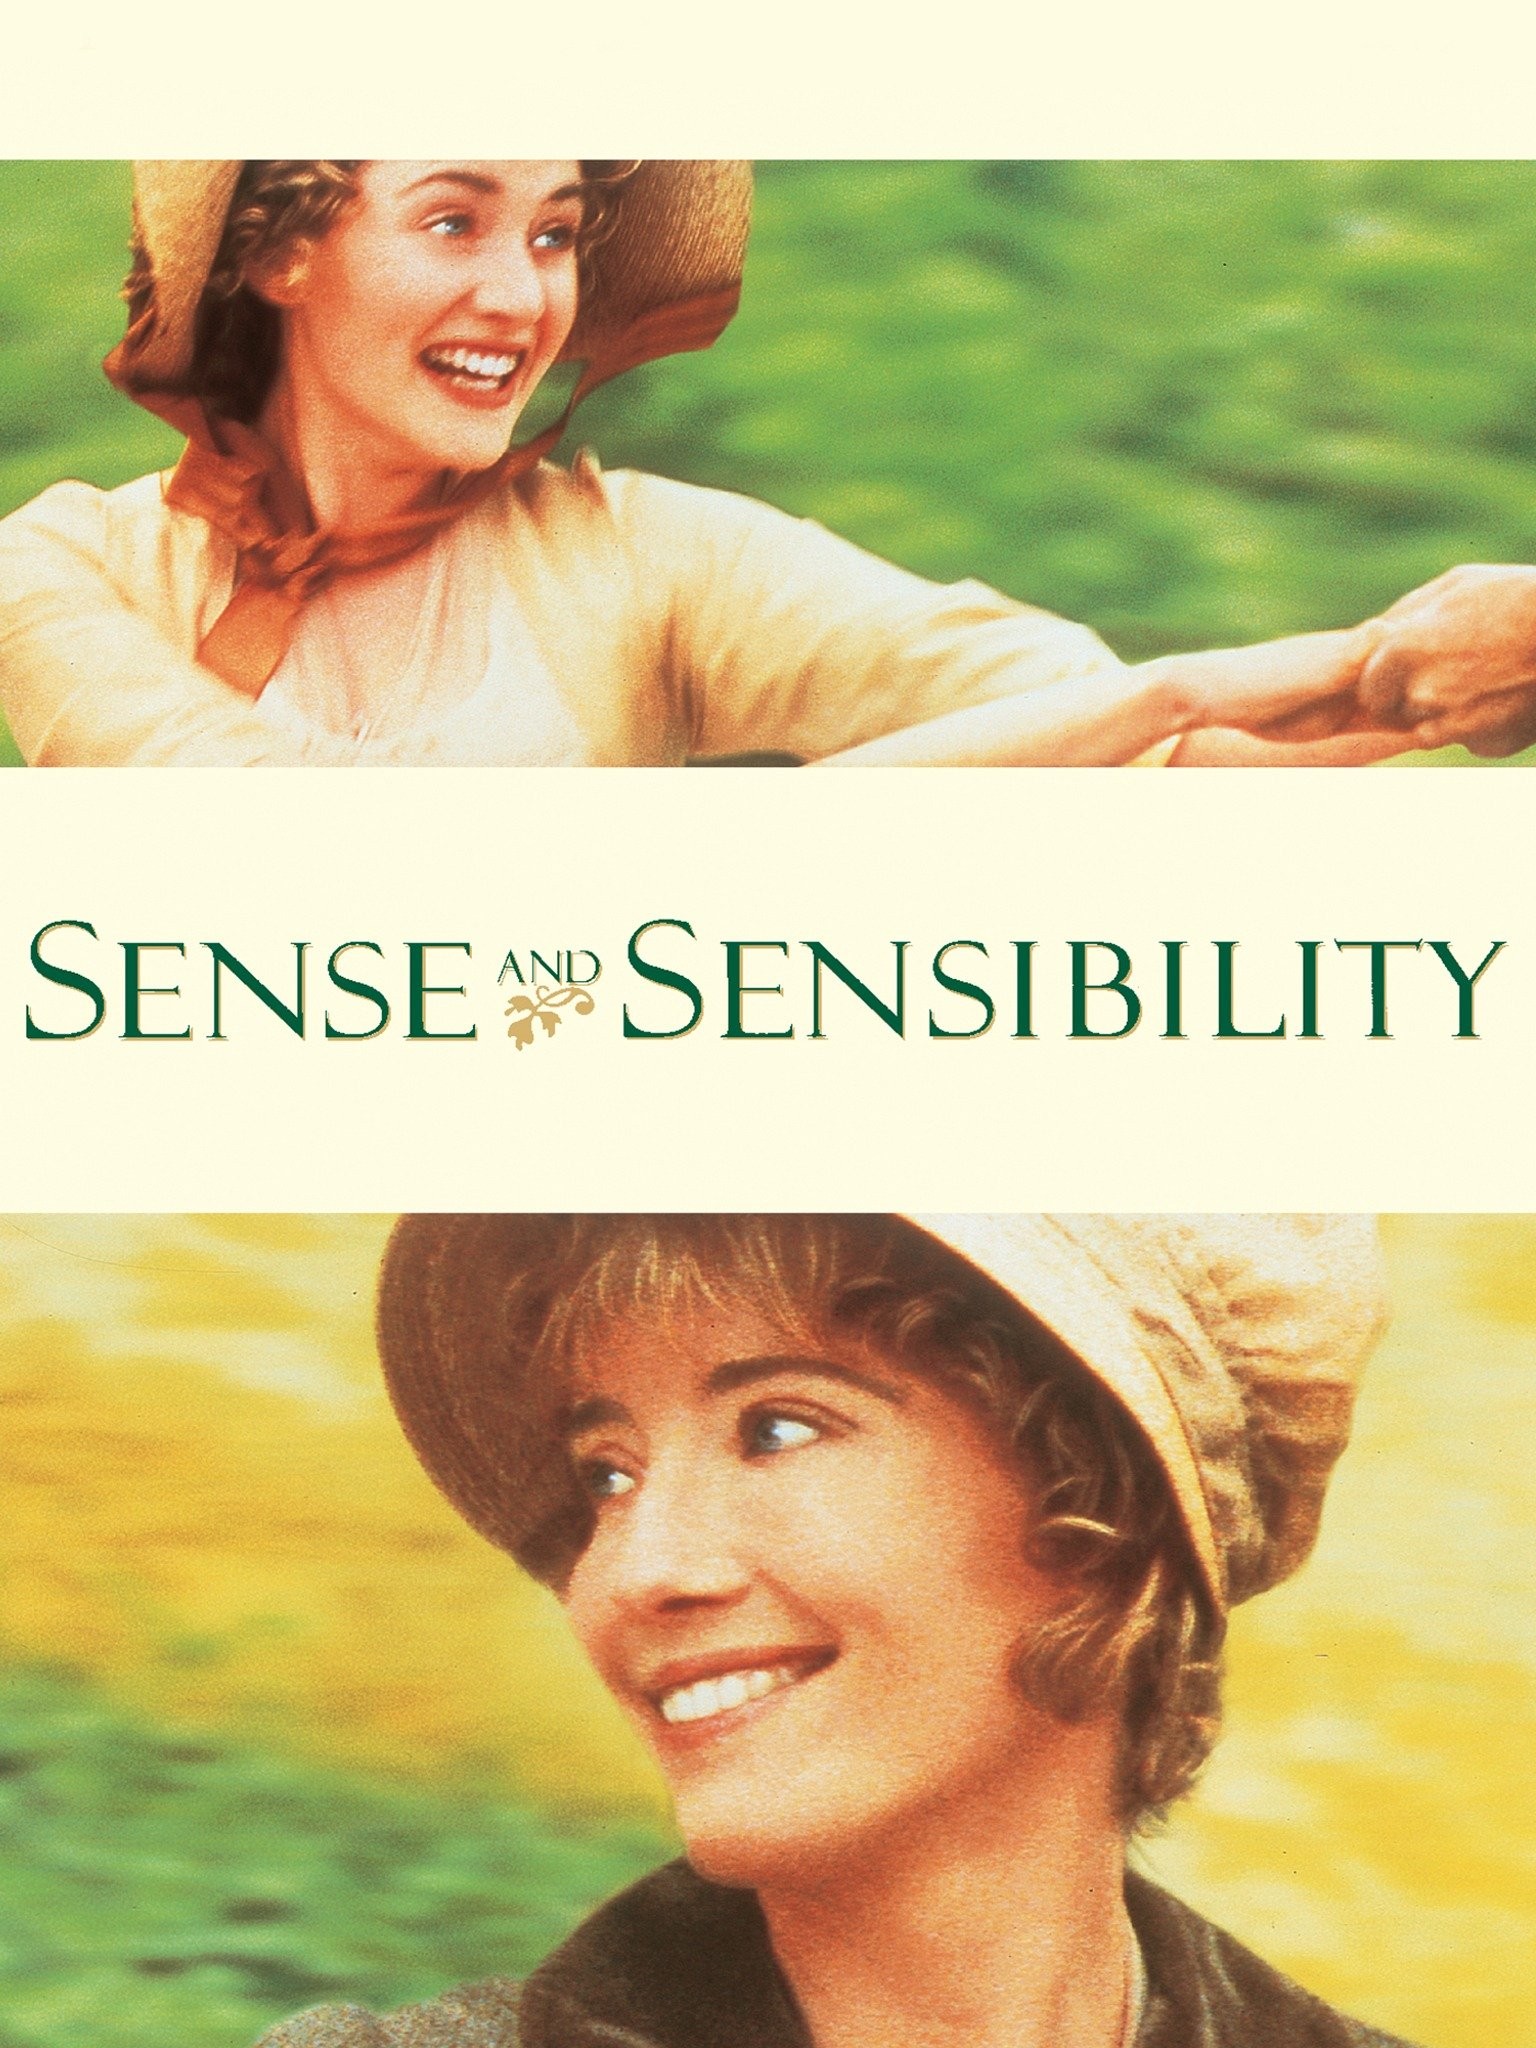 Love at First Sight' Review: Sense, Sensibility and Statistics